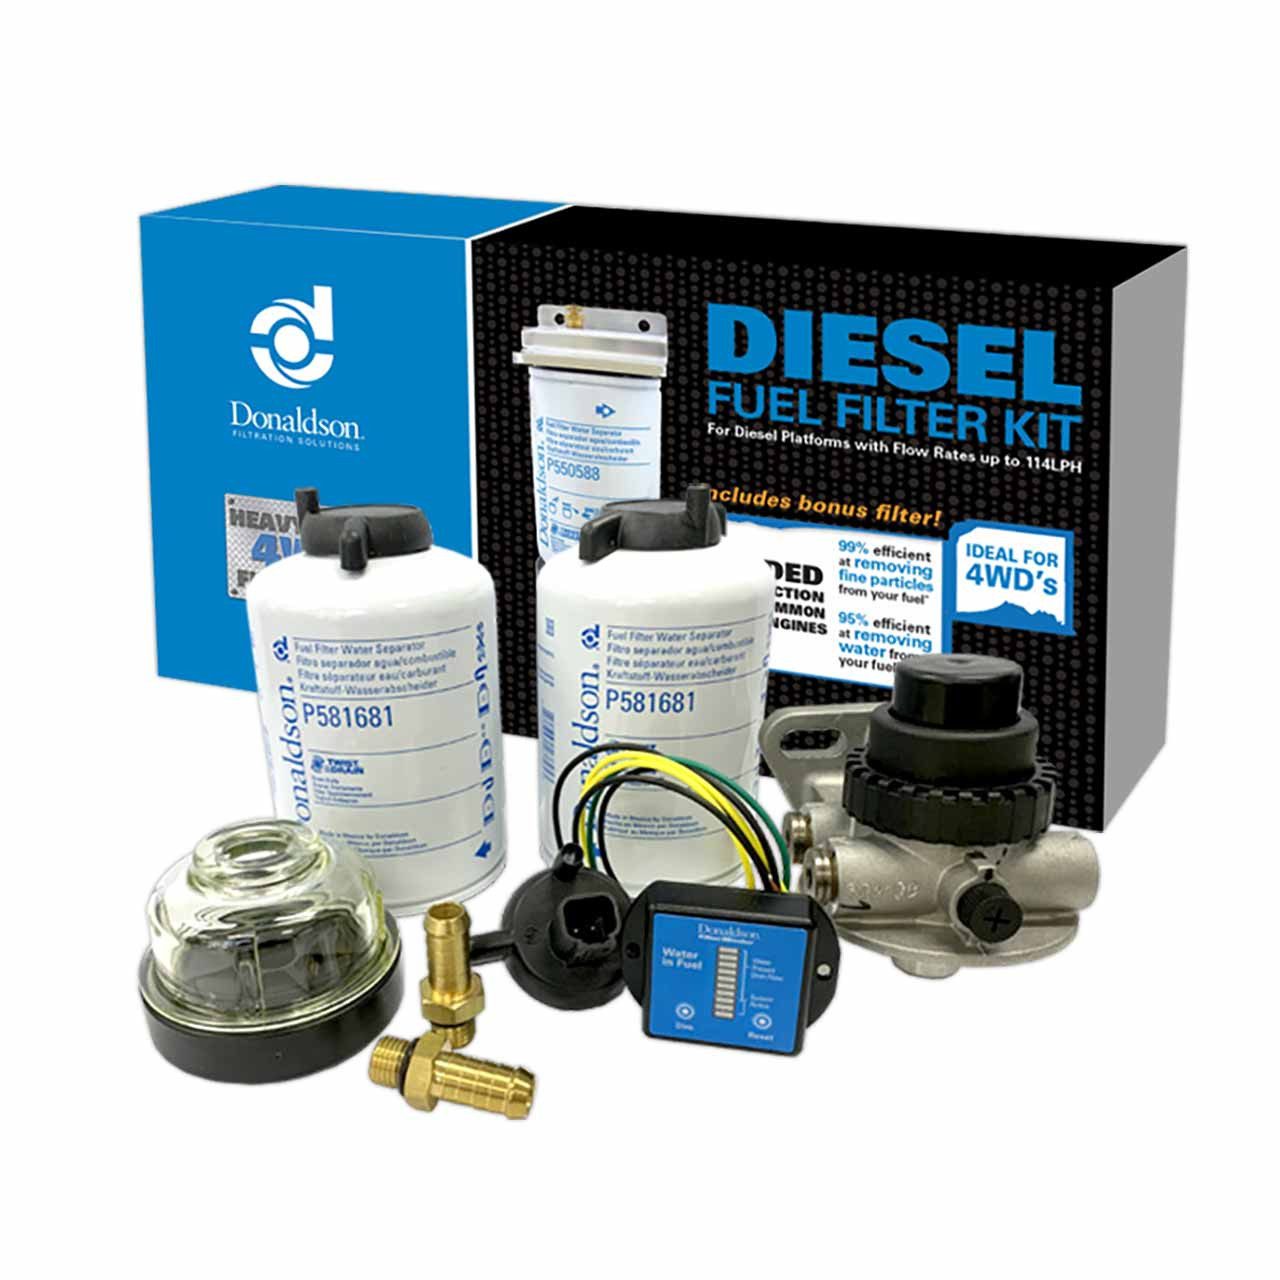 Diesel Fuel Filter Kits & Carts